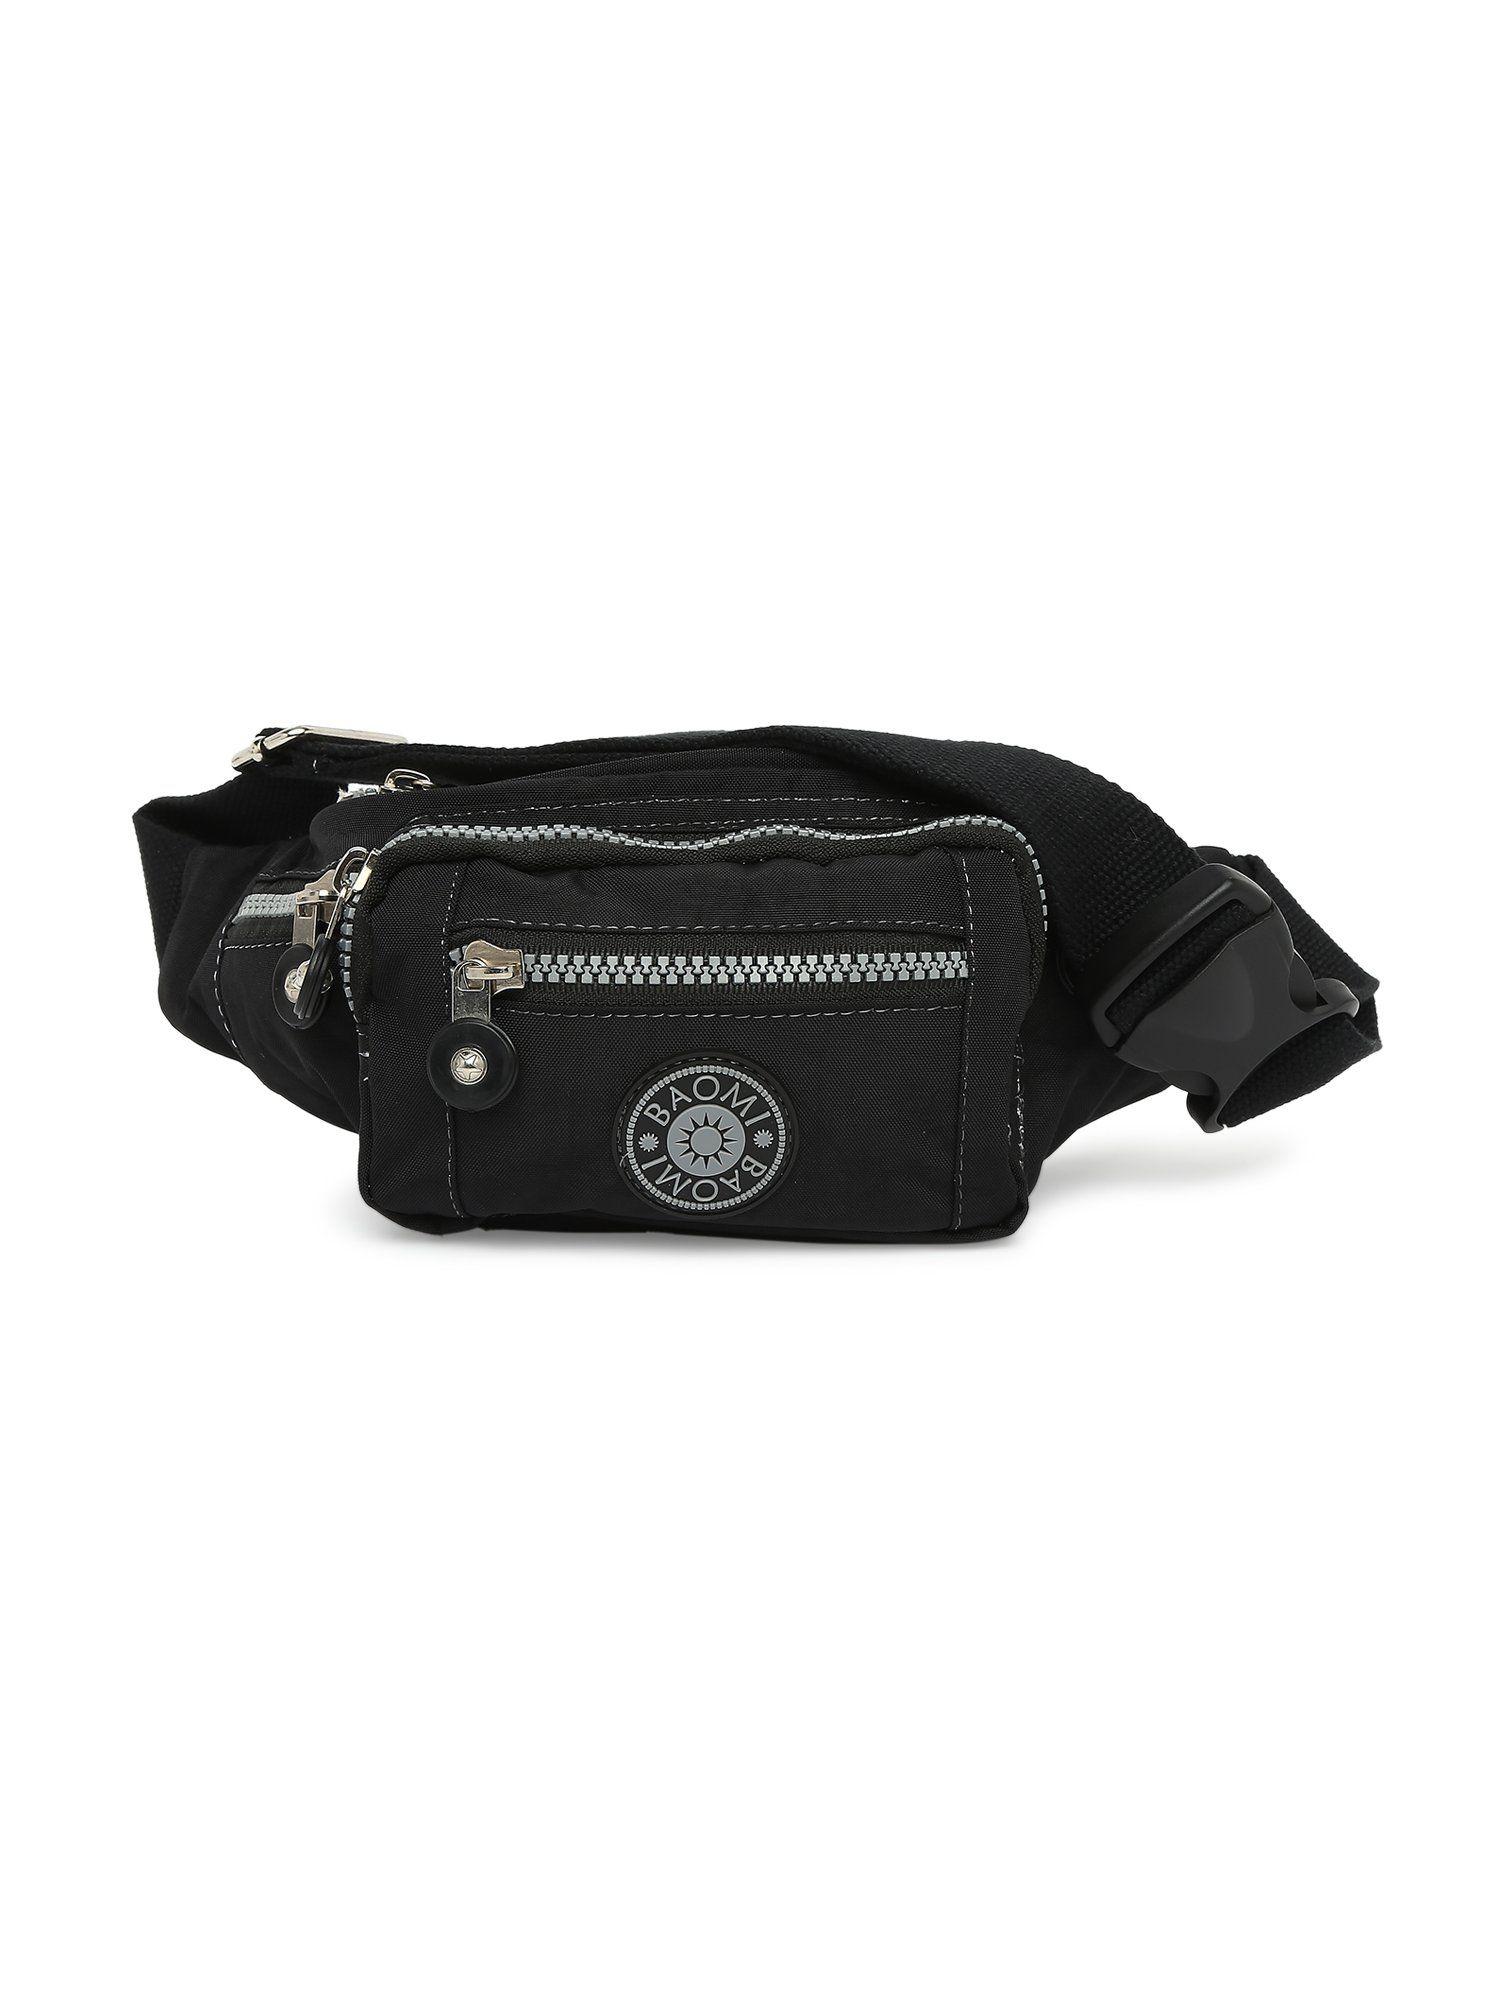 crinkle range black color soft case nylon waist bag